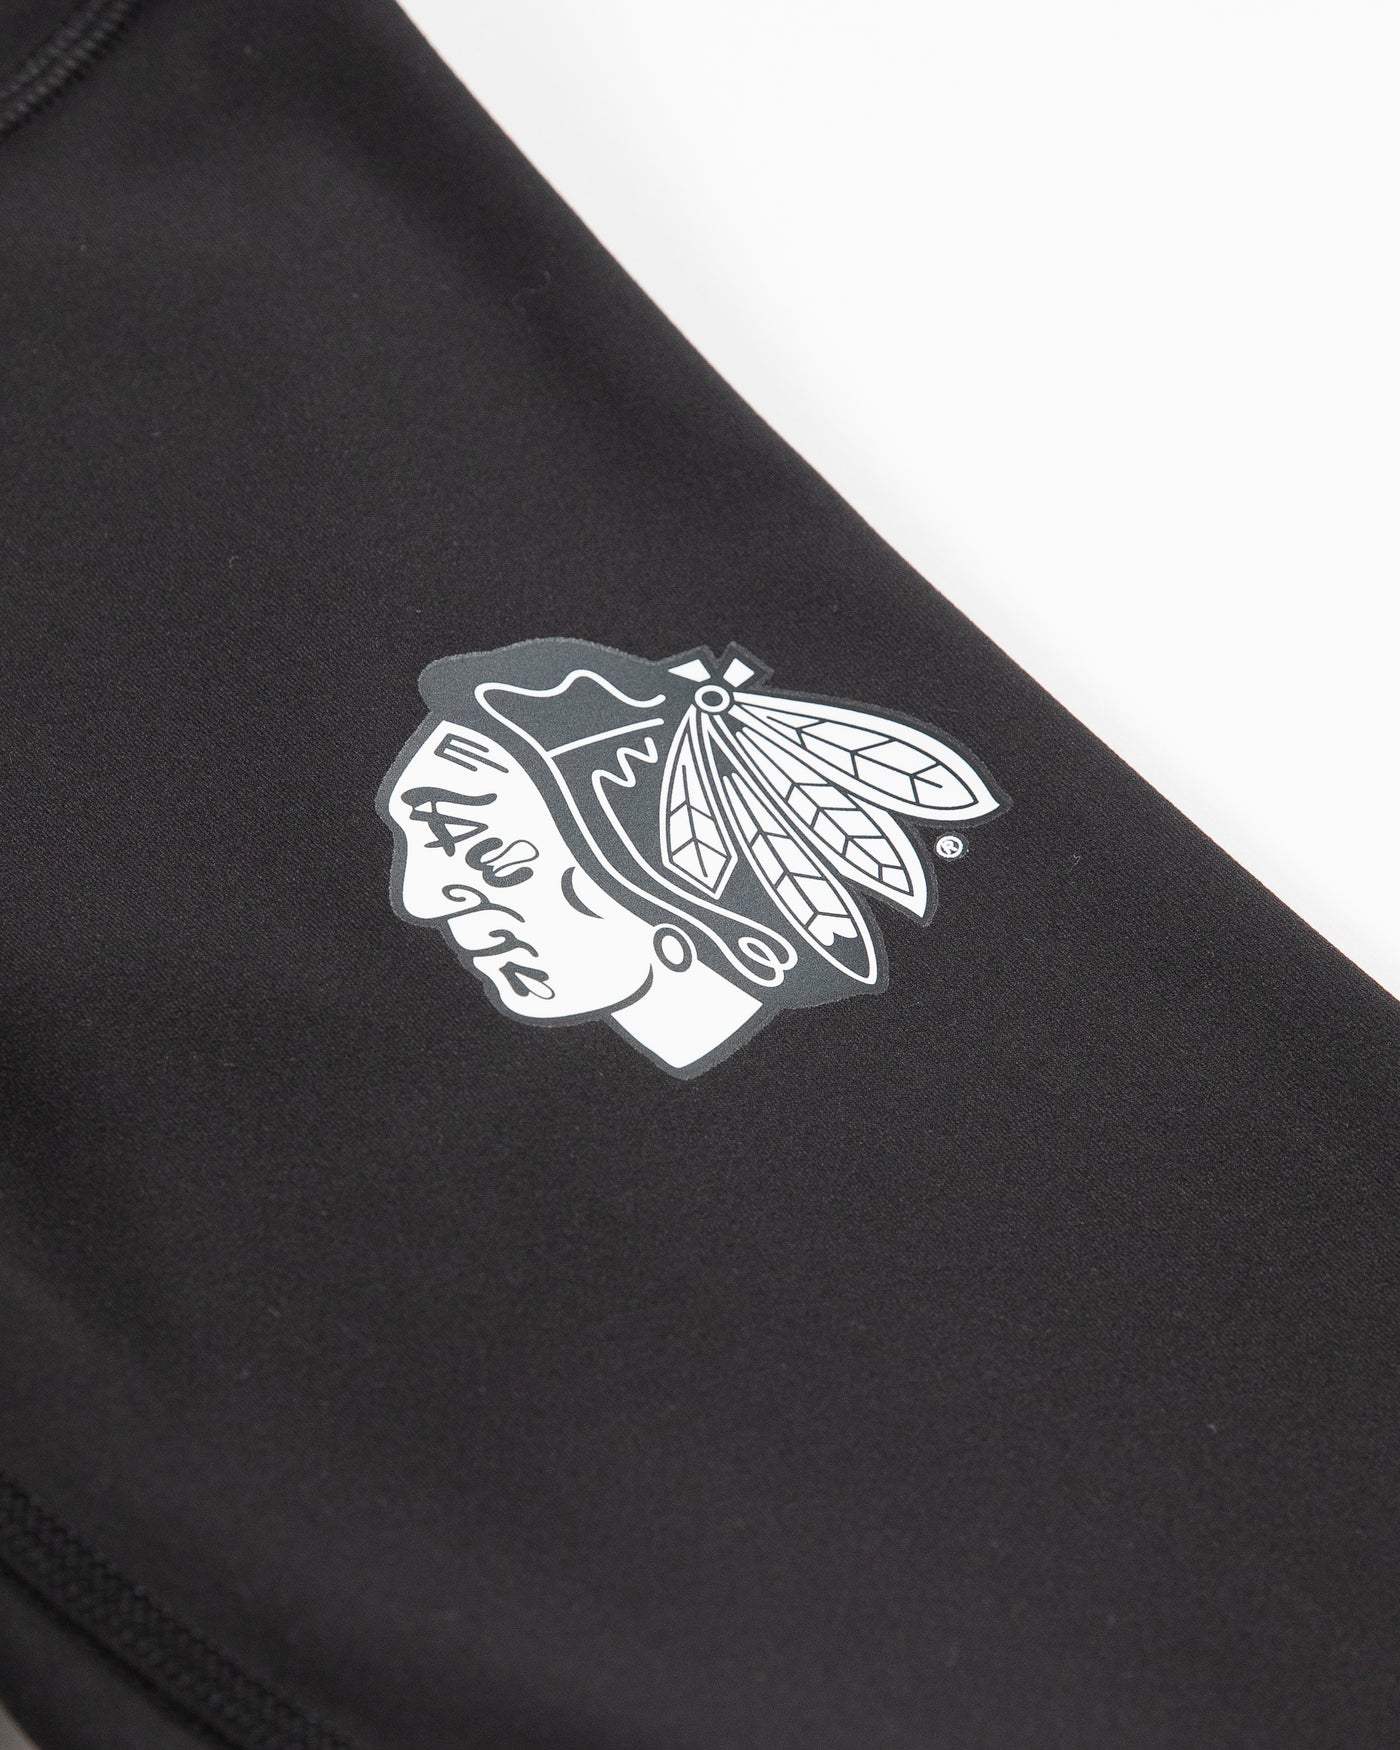 Black lululemon leggings with white tonal Chicago Blackhawks primary logo on left thigh - detail lay flat